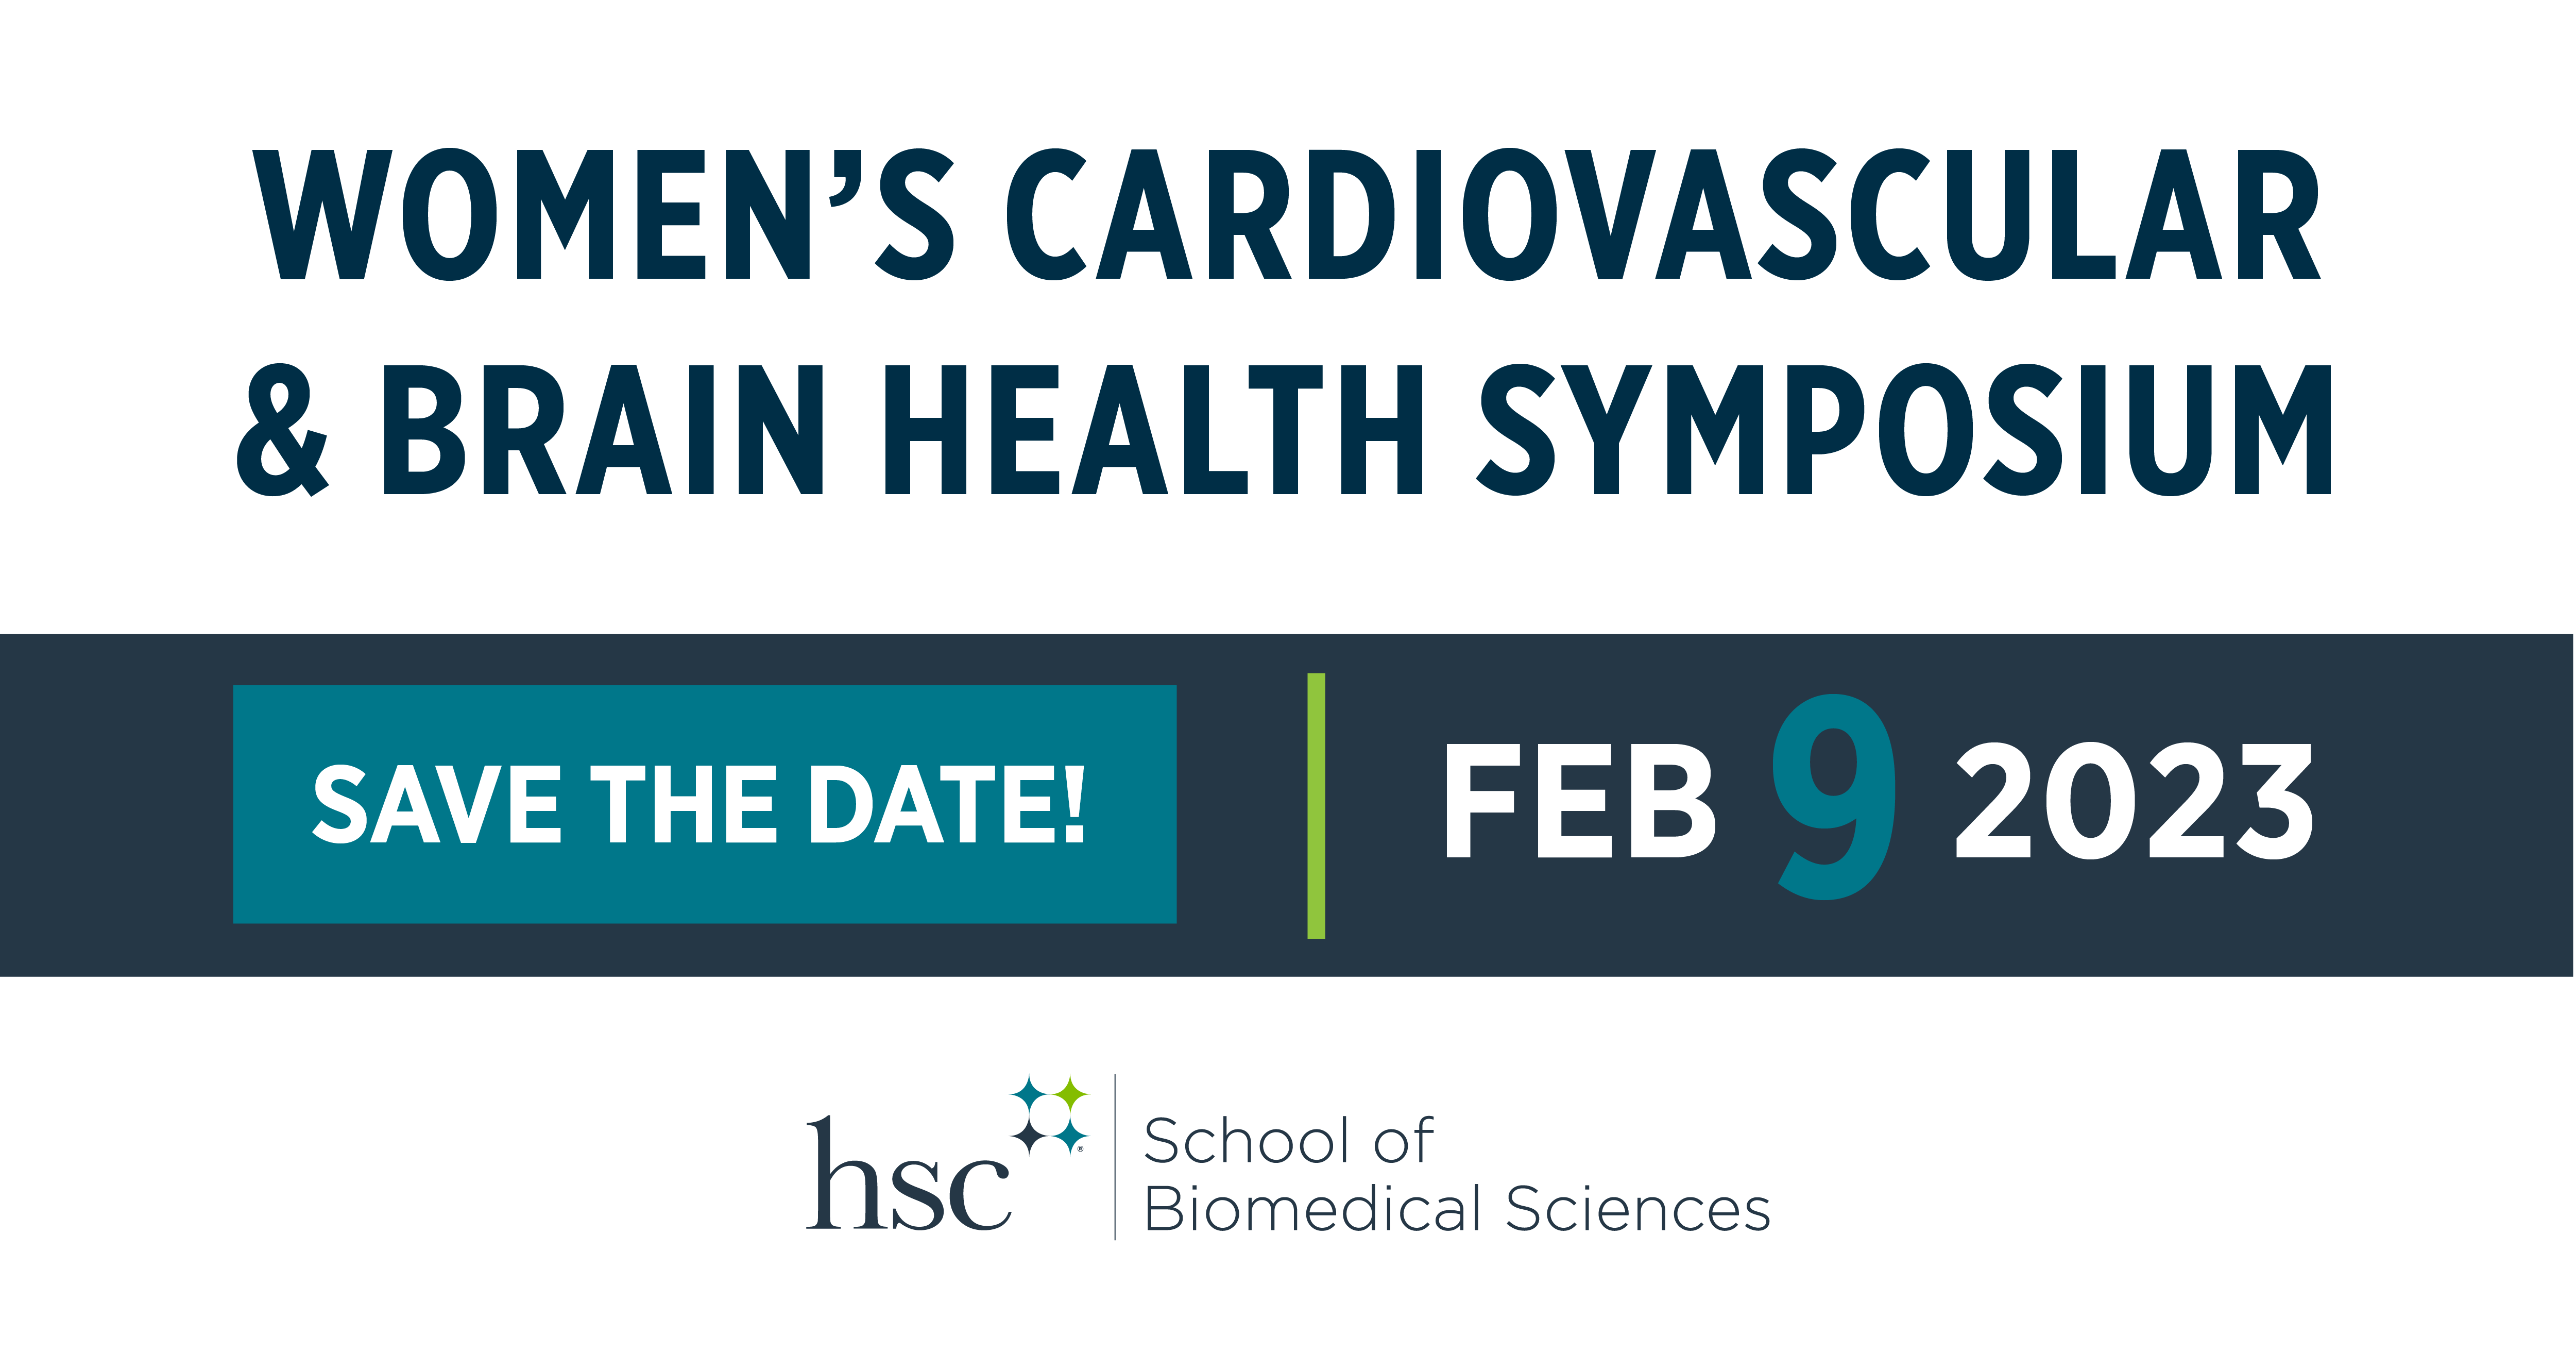 23 024 Sbs Women's Cardiovascular & Brain Health Symposium Save The Date 1200x630 Facebook 04